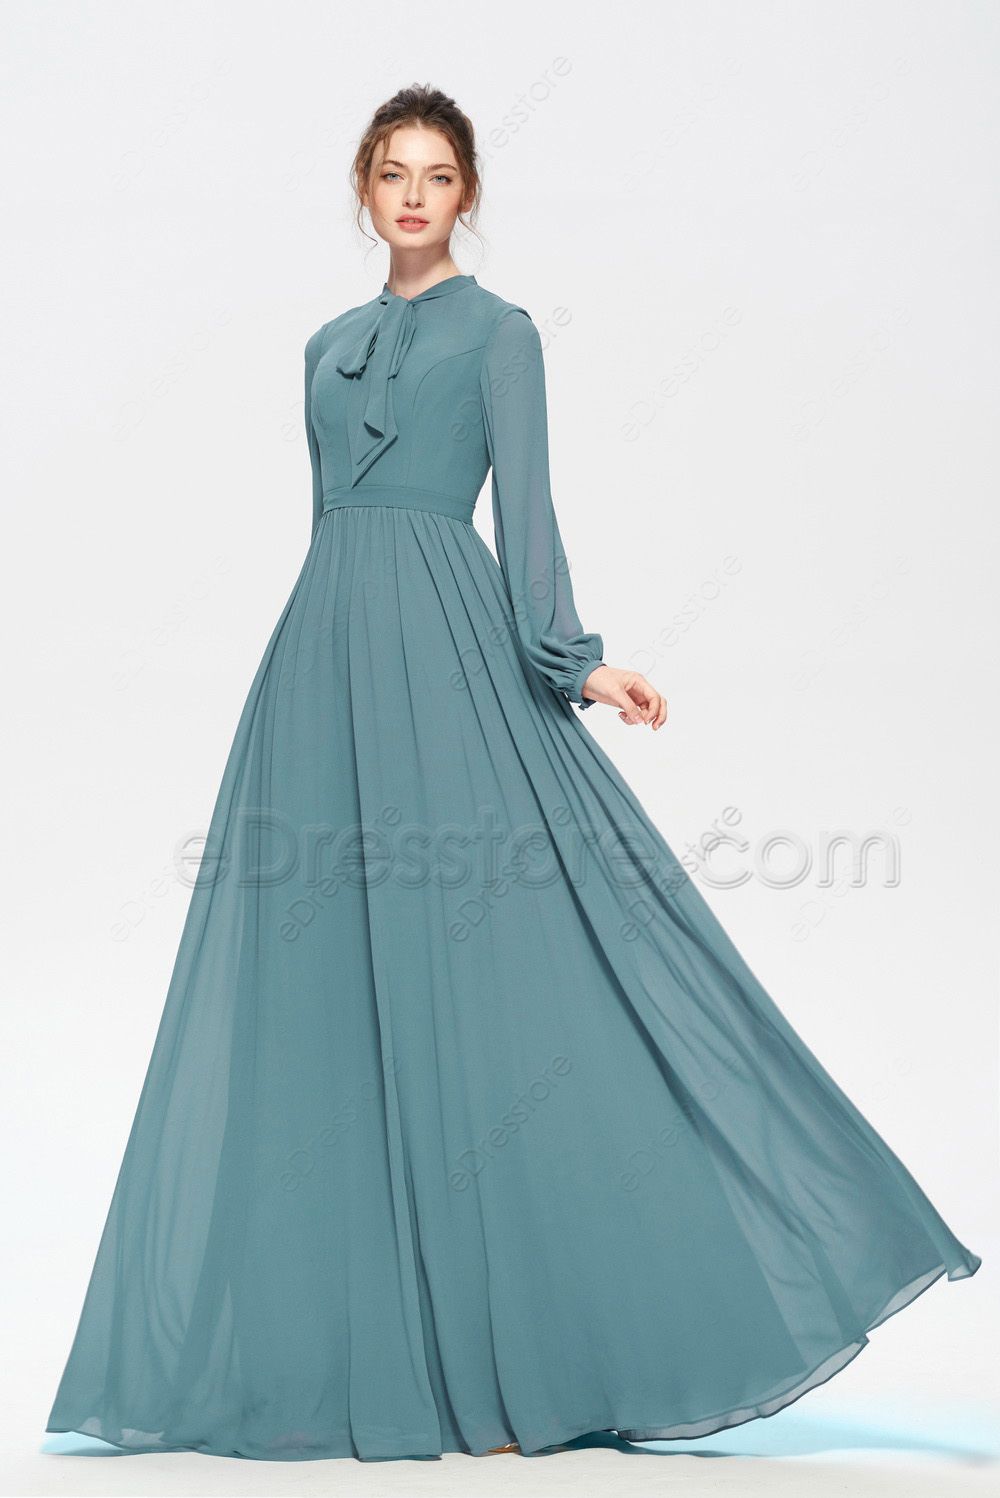 dusty green modest bridesmaid dresses long sleeves | edresstore